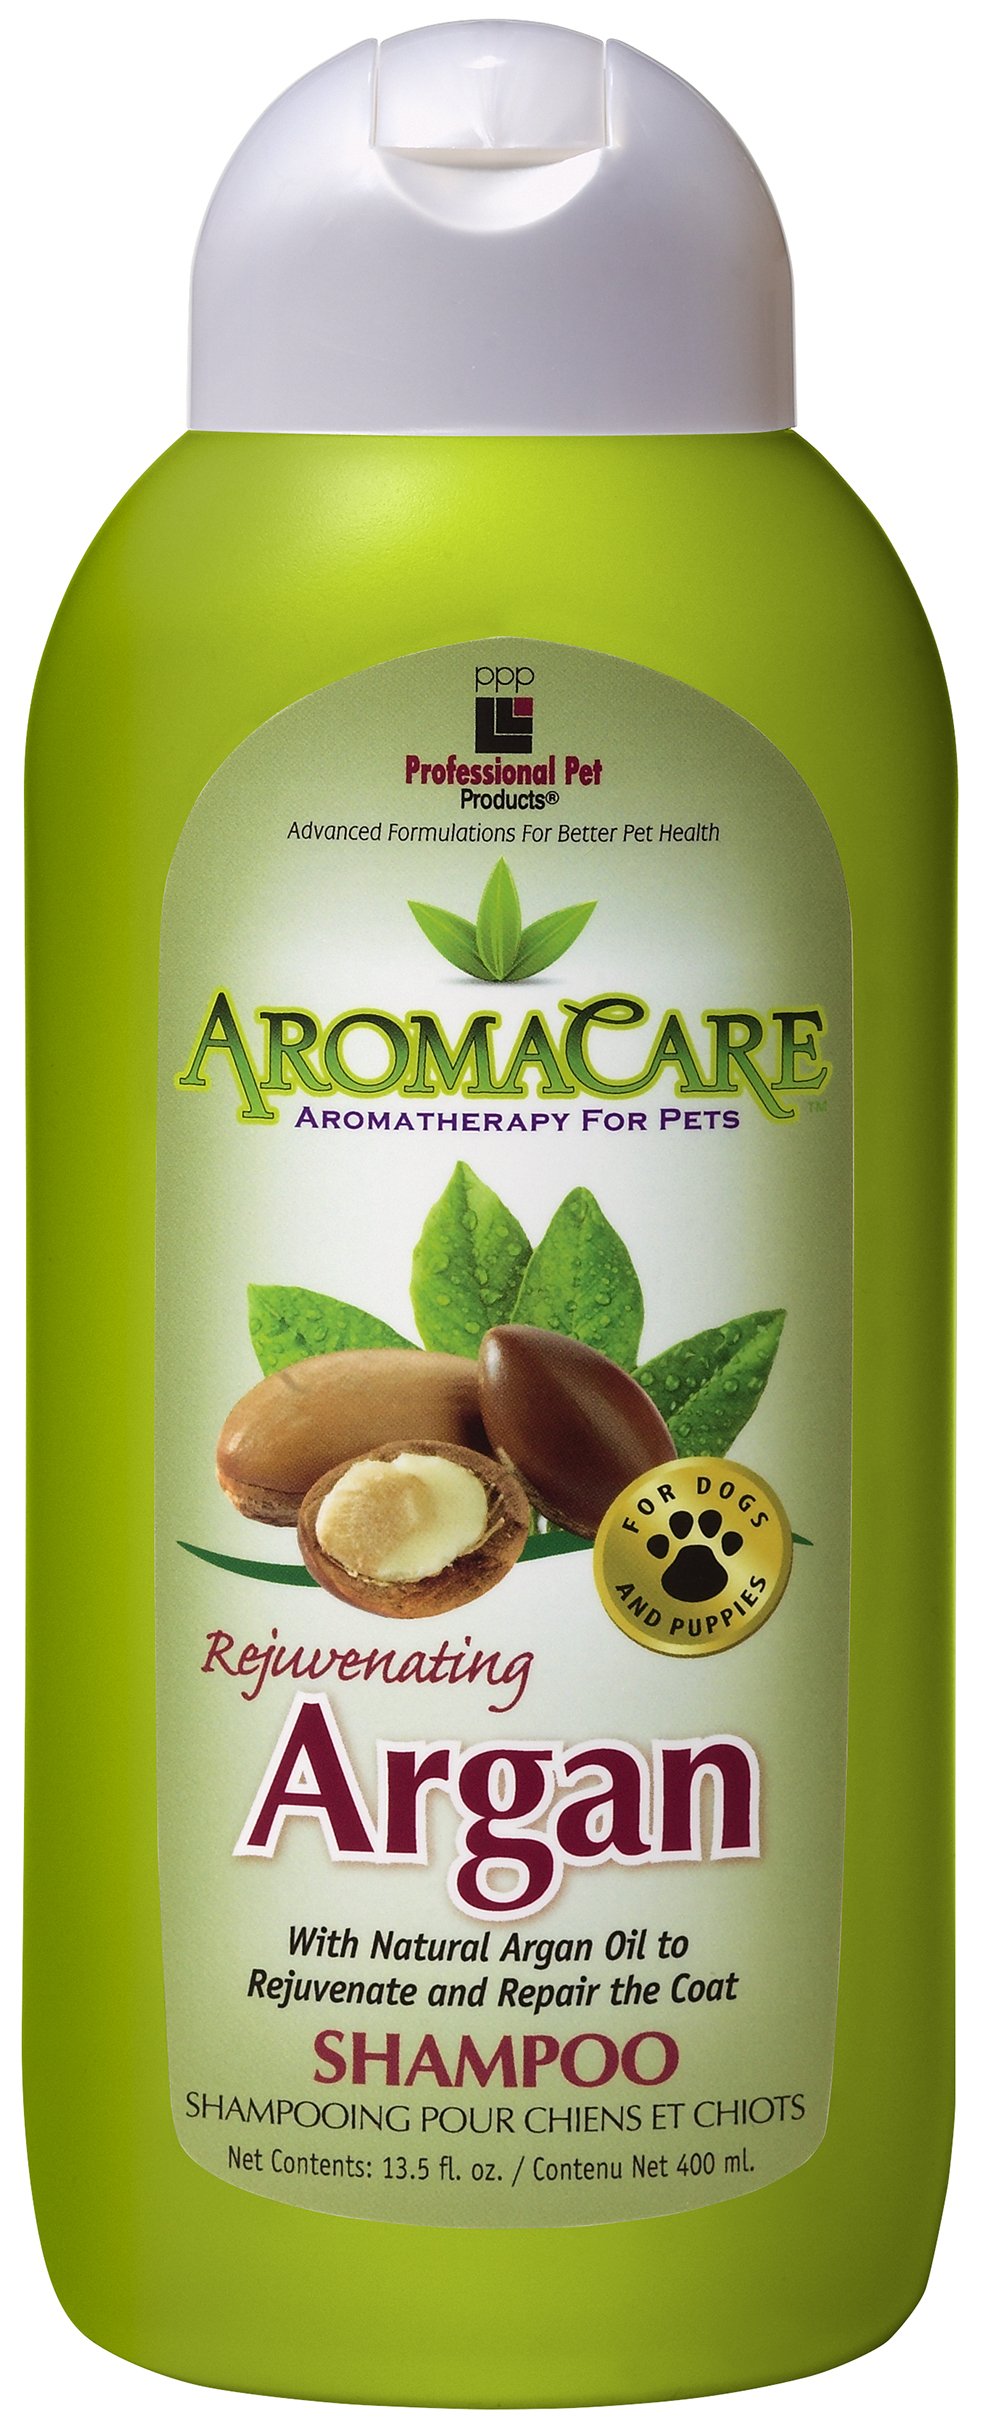 A1021 Aromacare Argan Shampoo.jpg